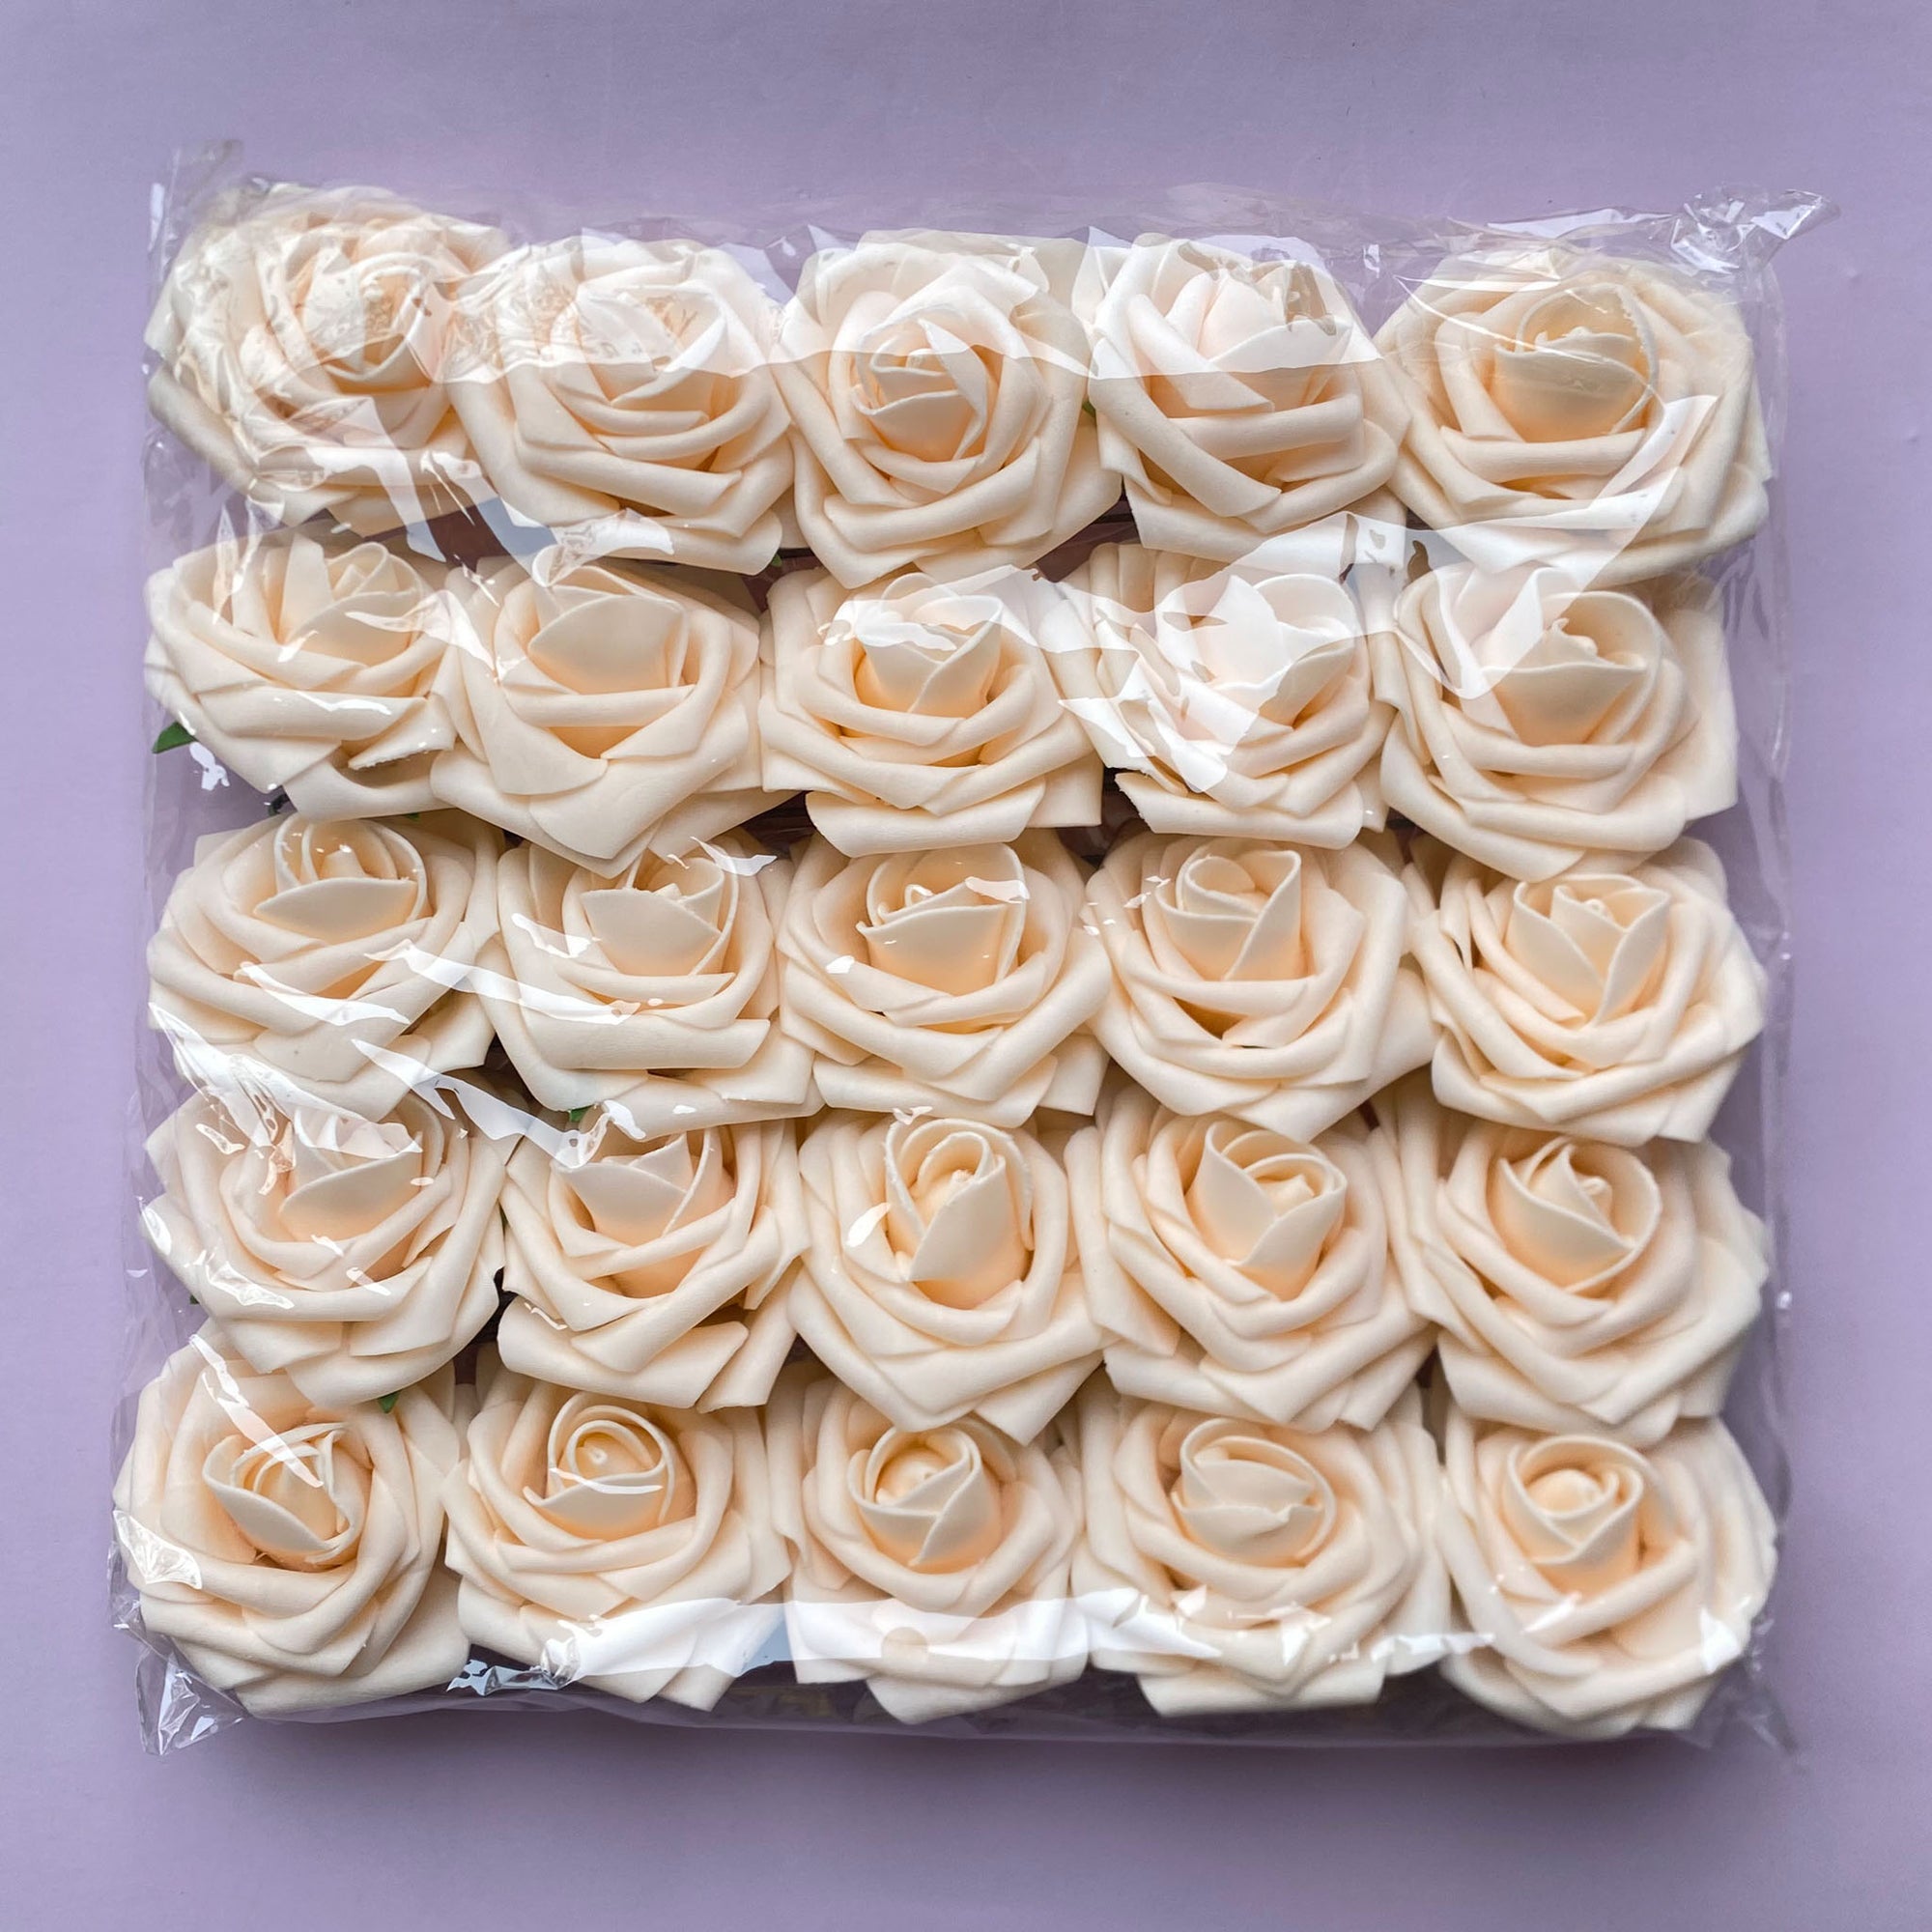 Artificial Wedding Flowers Blush Pink Rose 50 Bulk